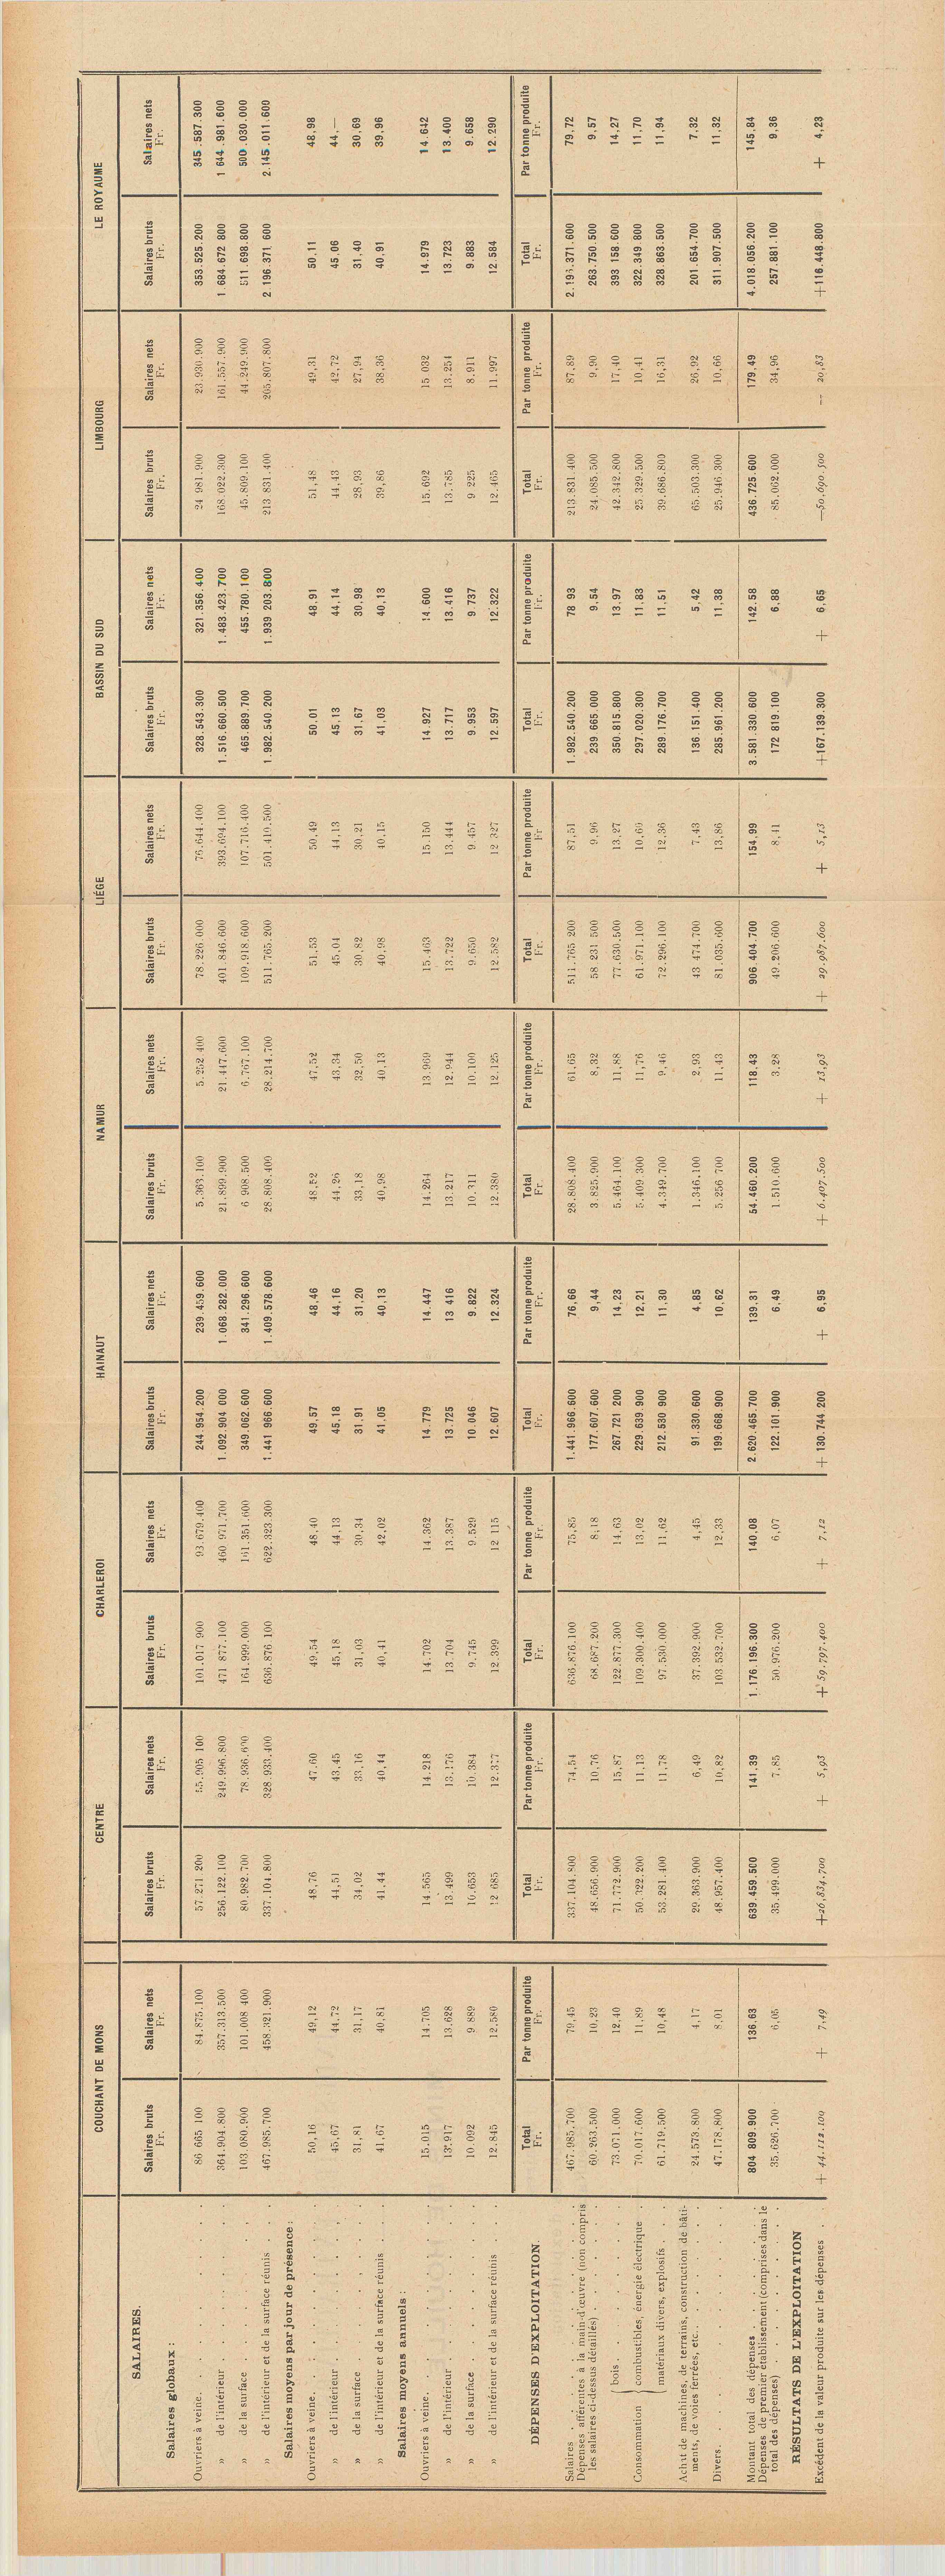 1928 800 1 tab.jpg